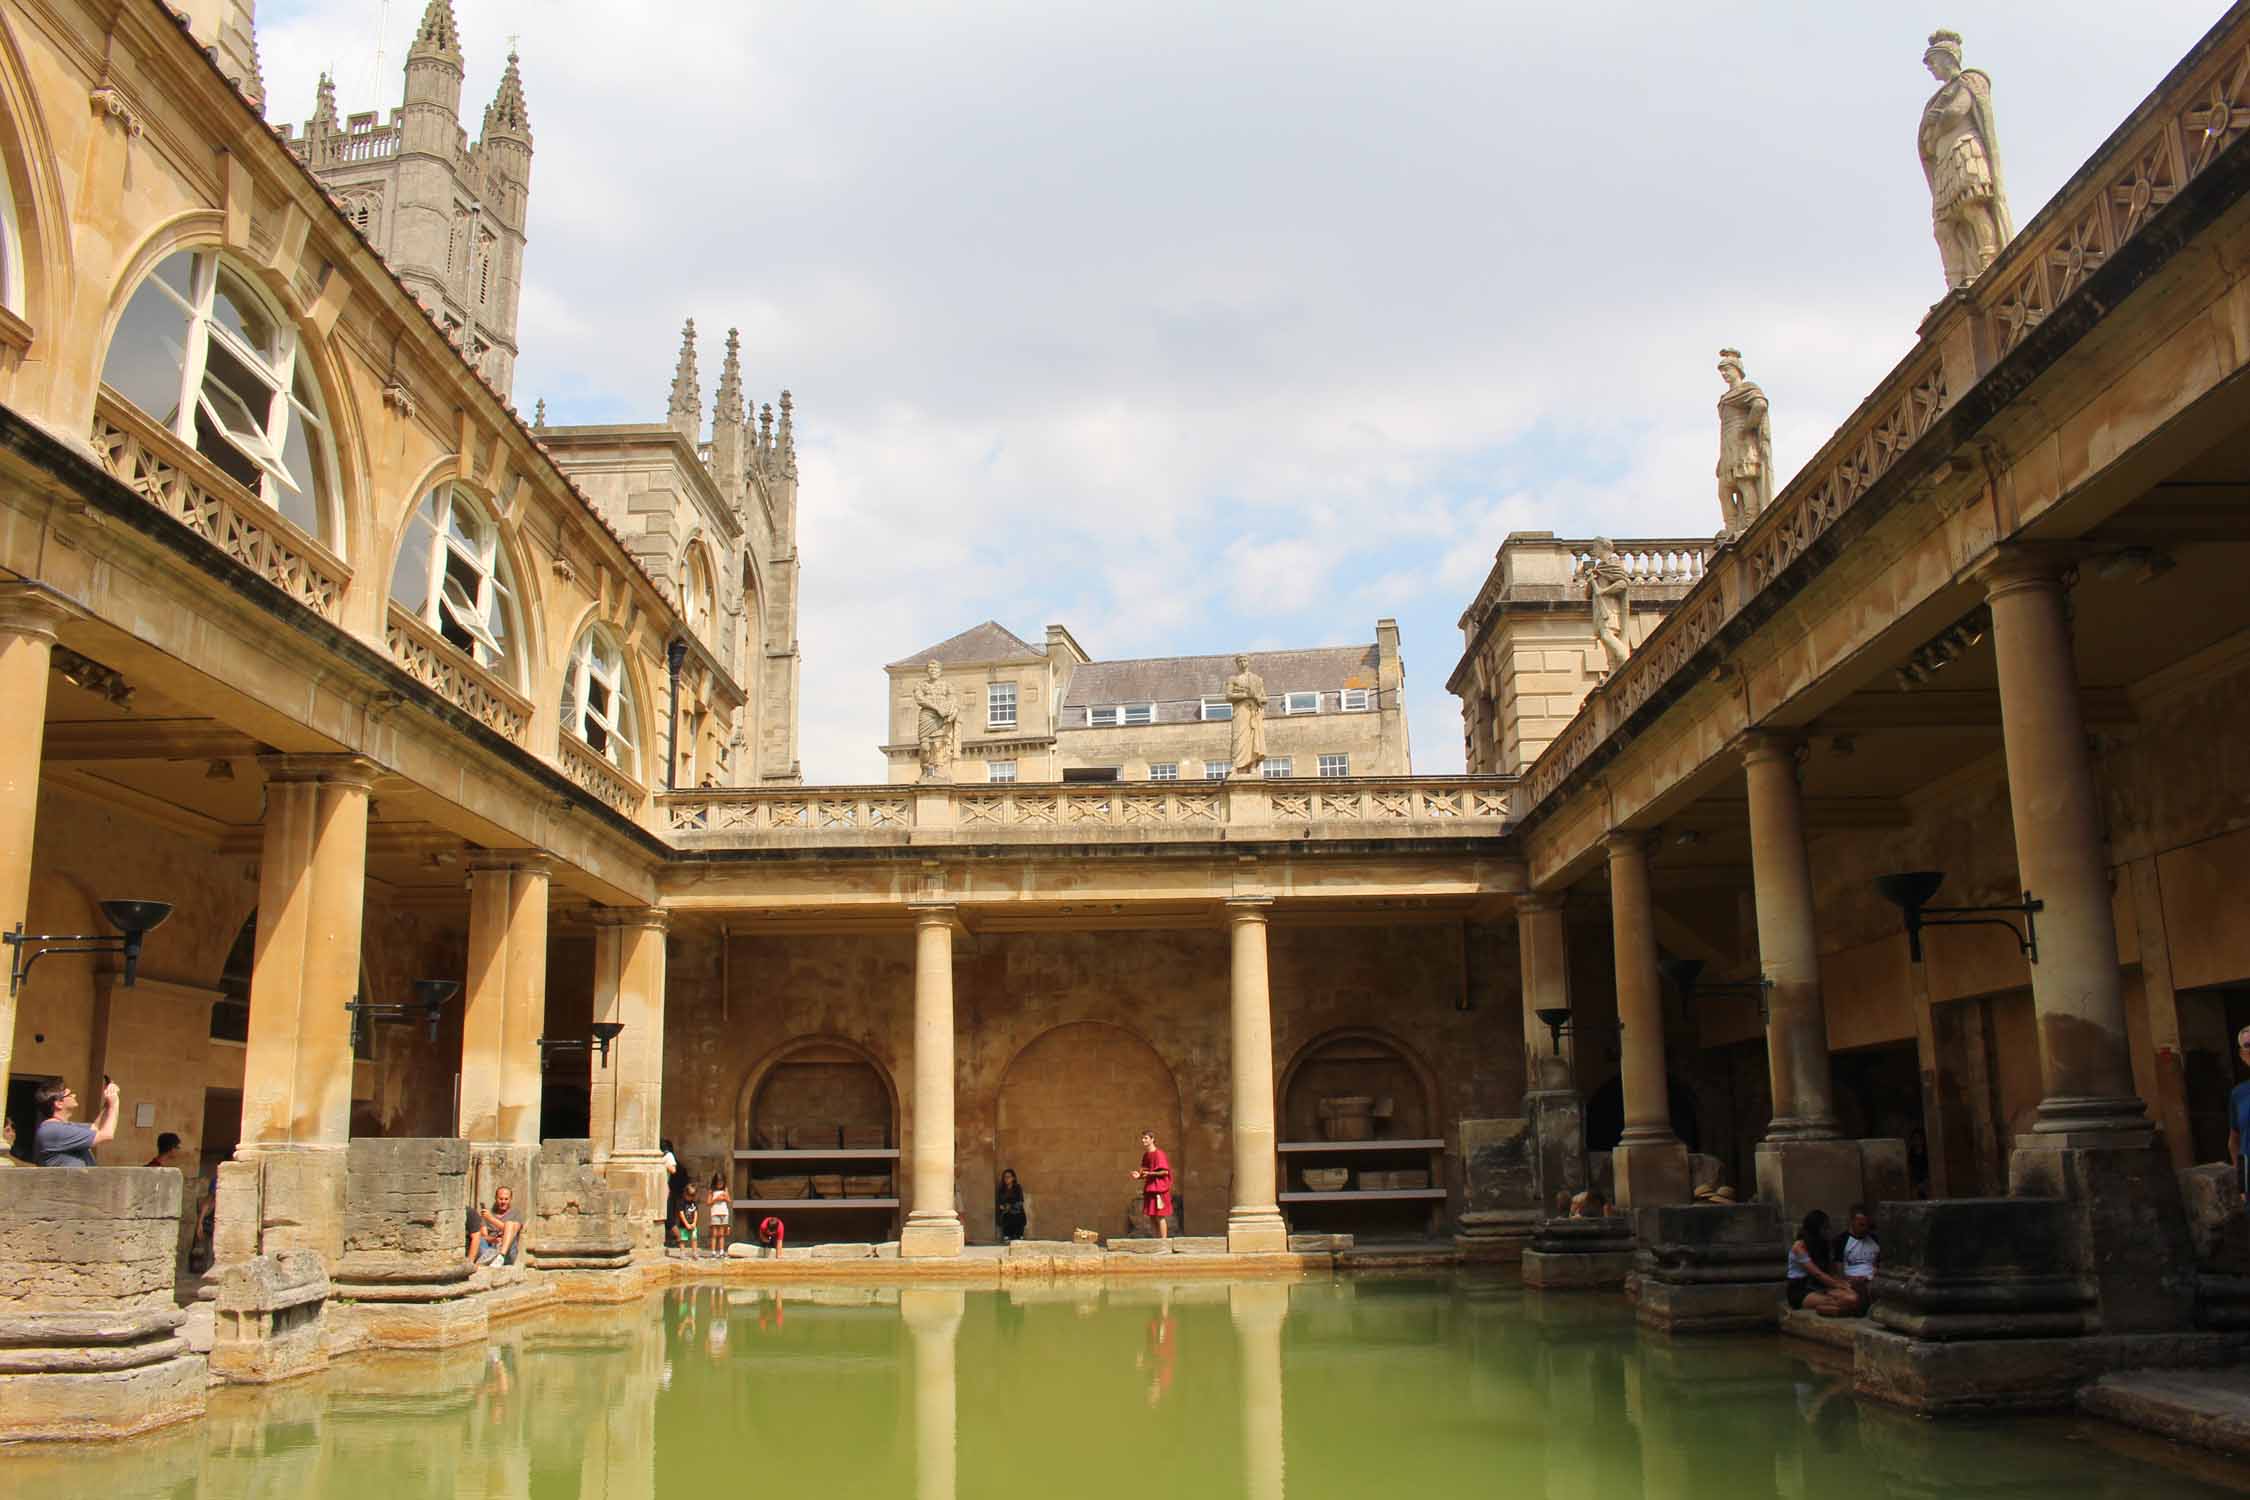 Angleterre, Bath, bains romains, eaux